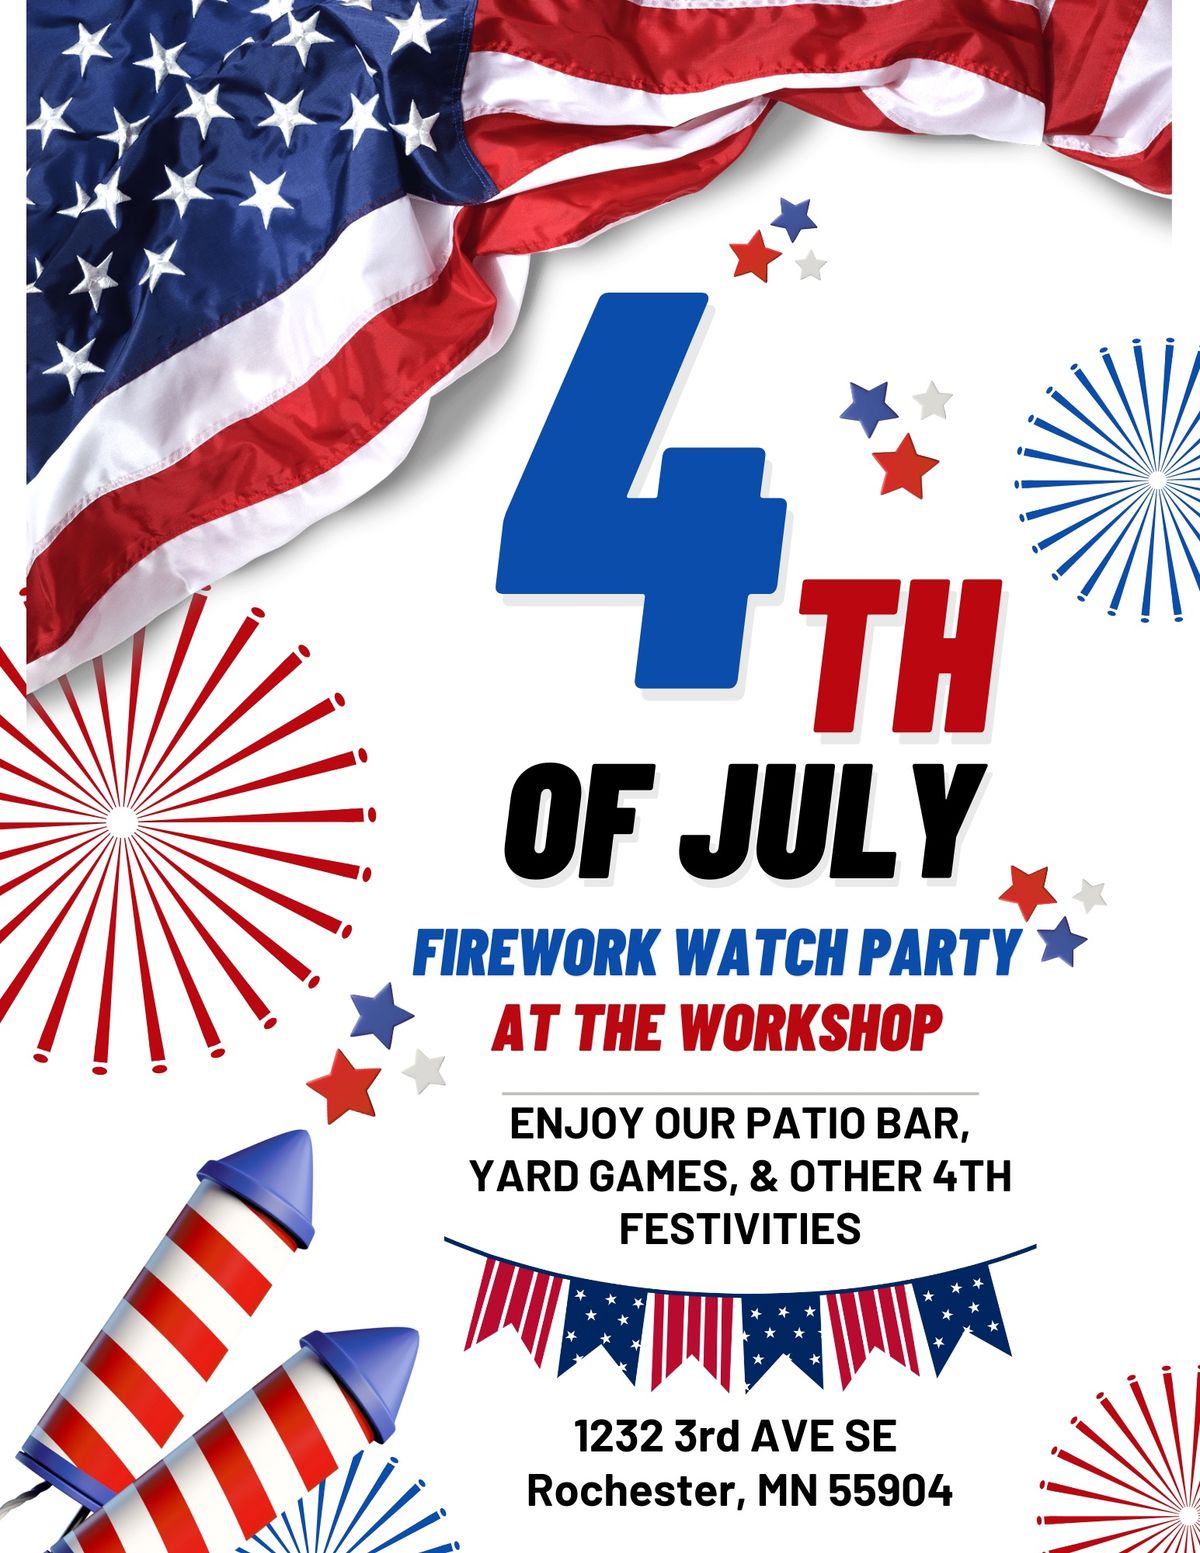 July 4th Firework Watch Party @ Workshop!